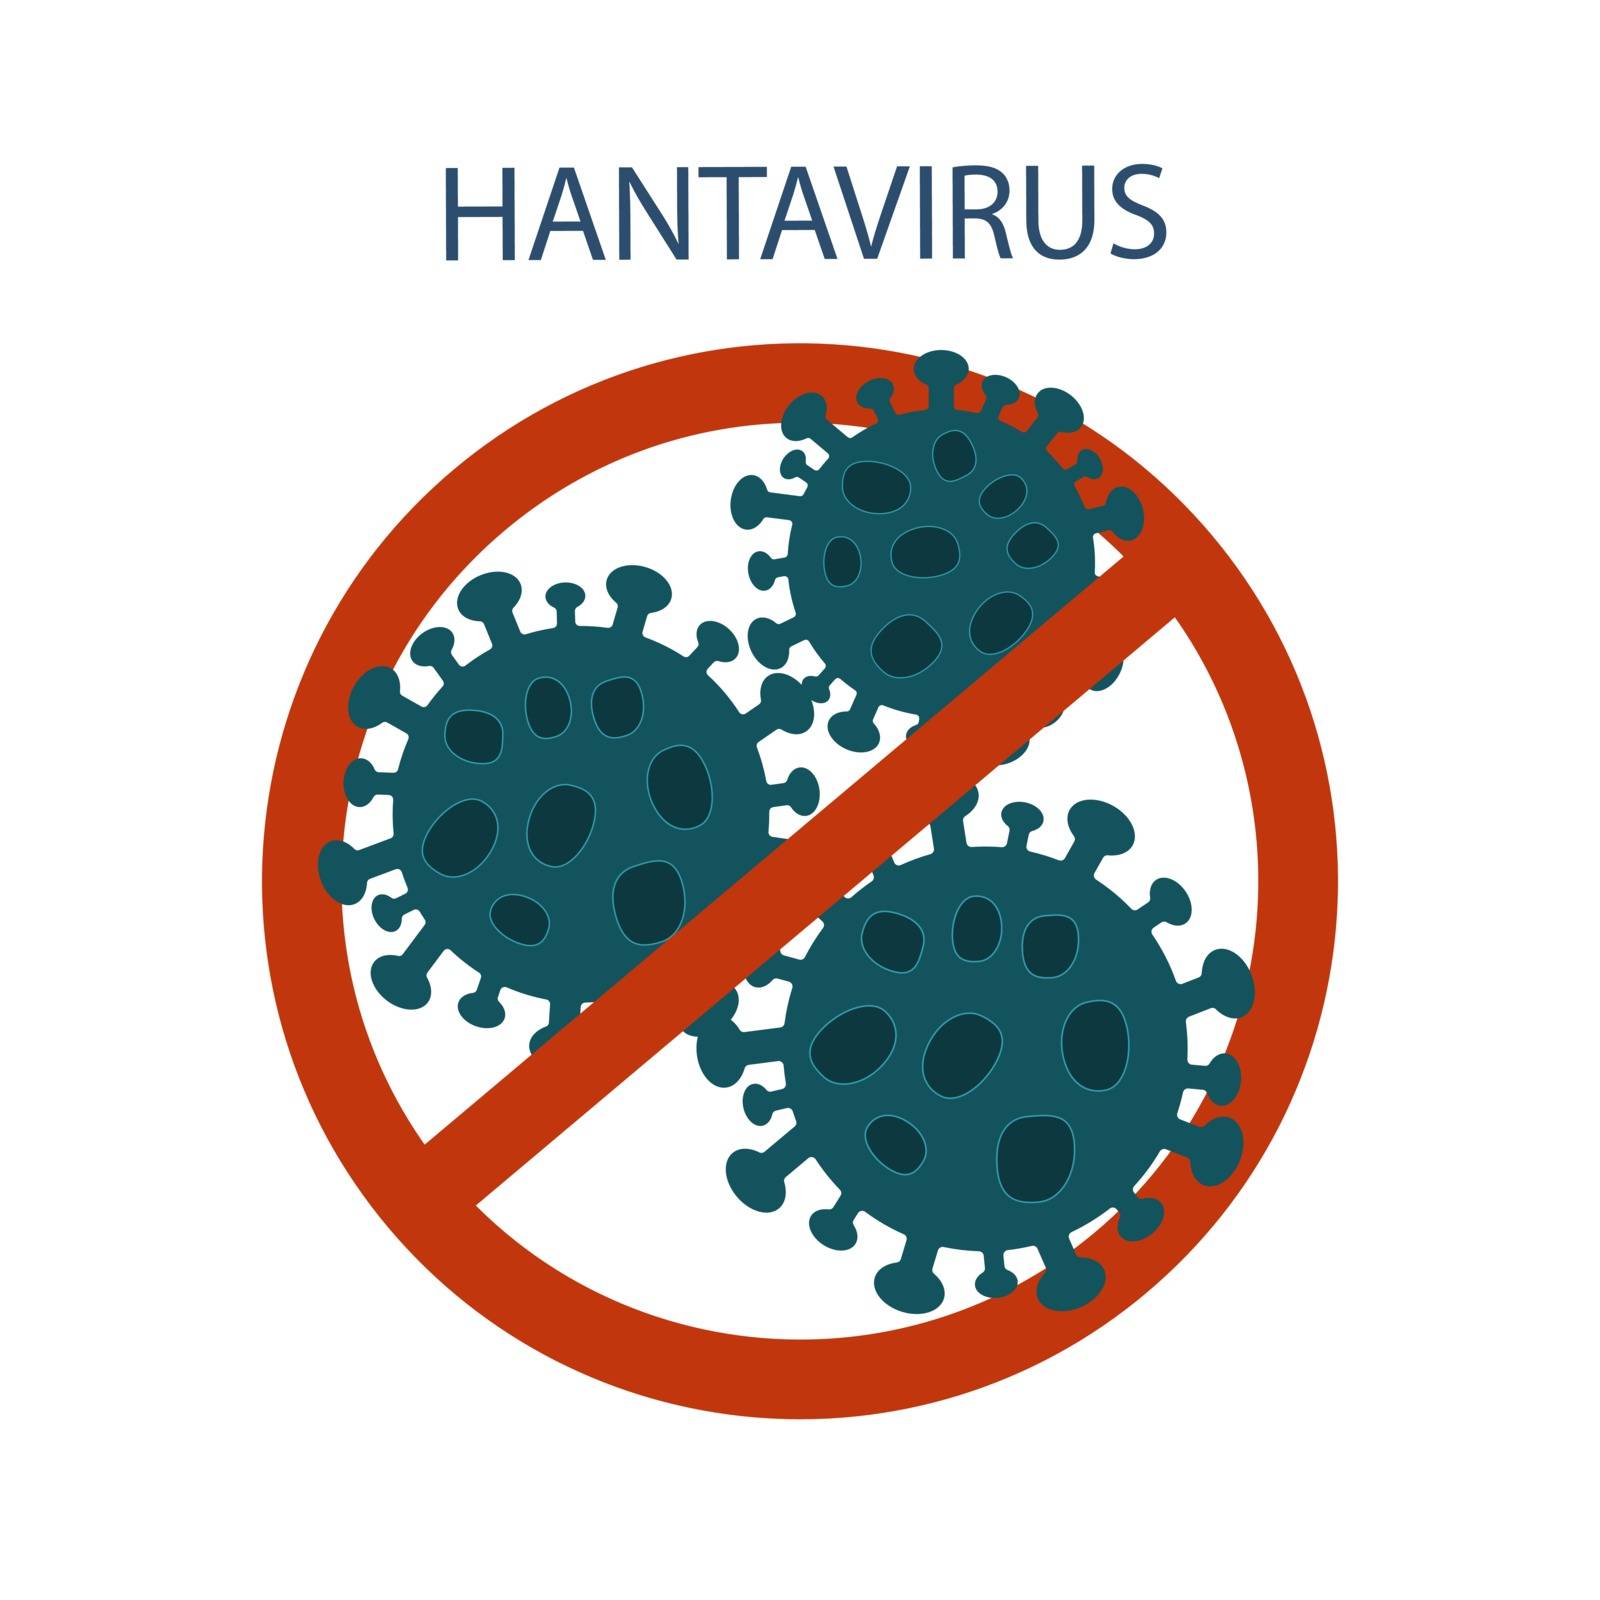 Stop hantavirus. Warning sign vector by Helenshi